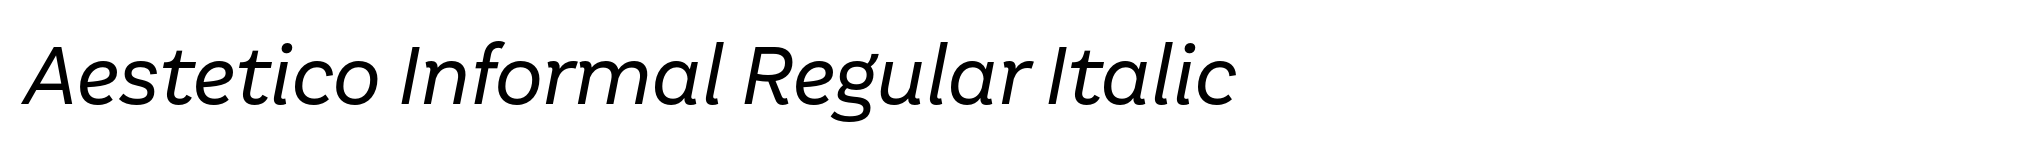 Aestetico Informal Regular Italic image